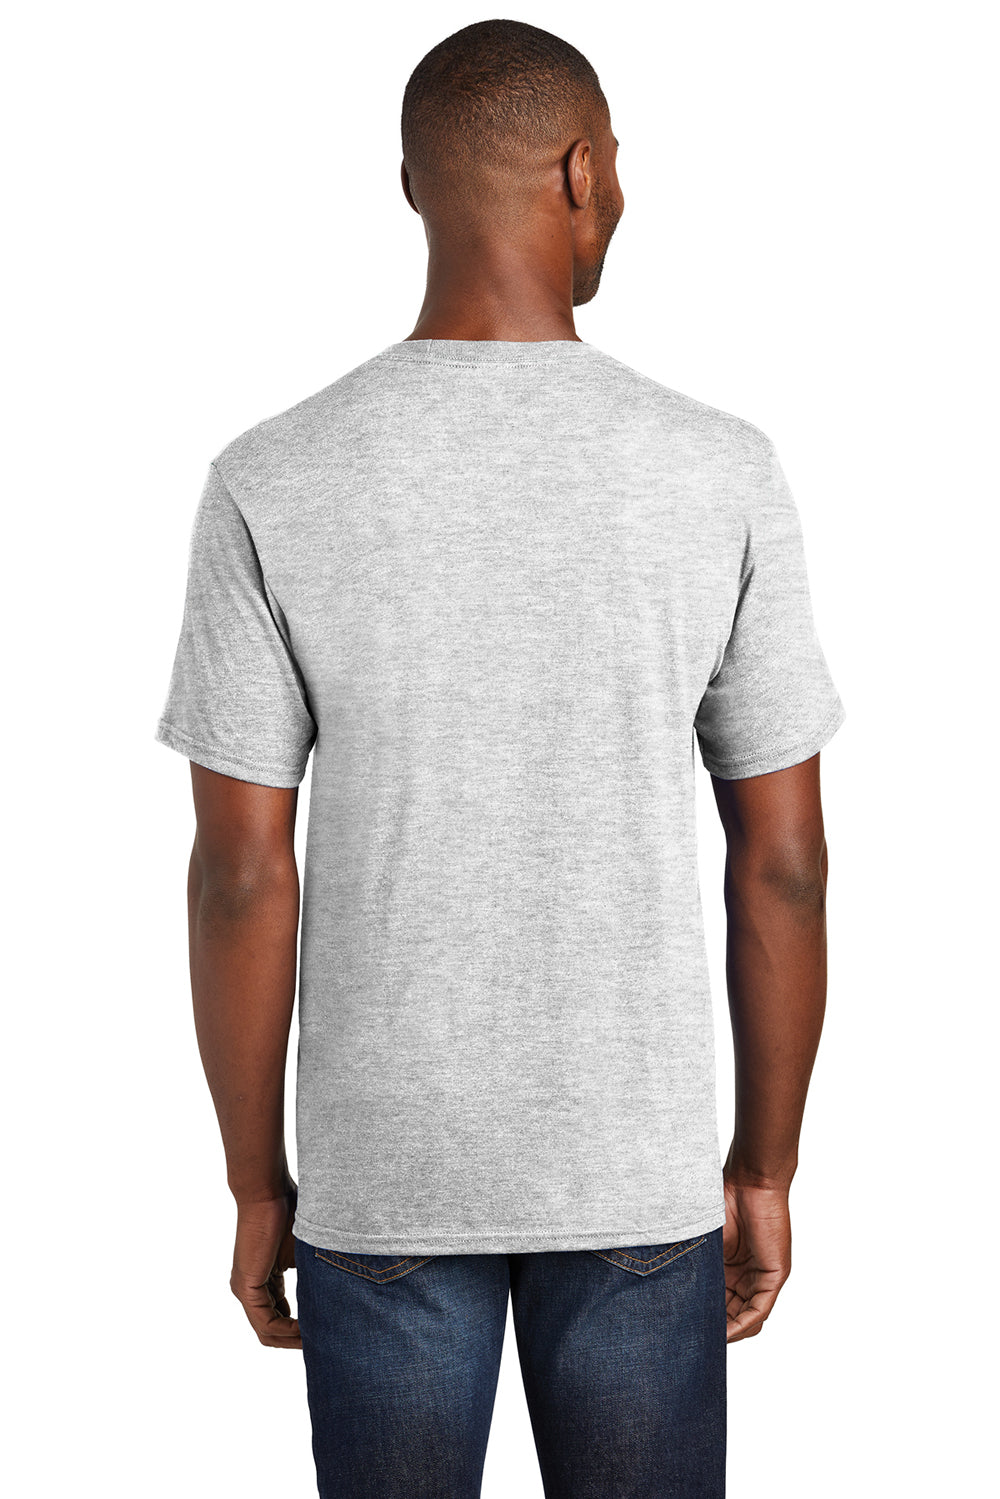 Port & Company PC455 Mens Fan Favorite Short Sleeve Crewneck T-Shirt Ash Grey Back